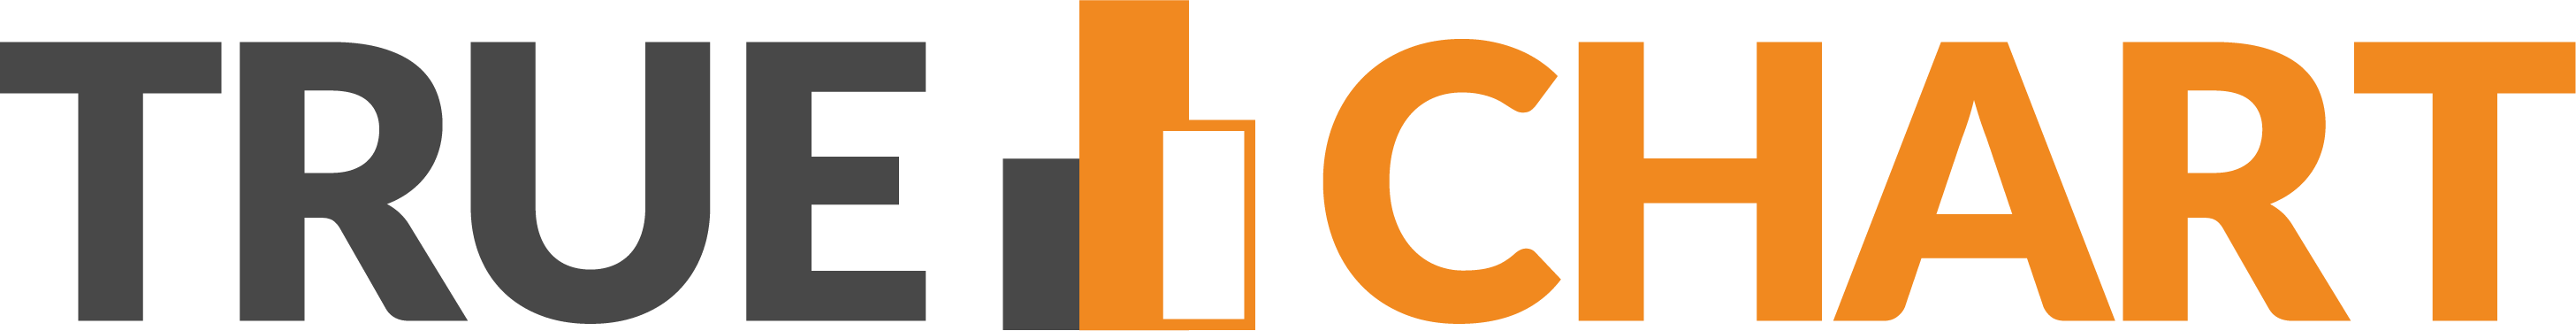 high coordination logo